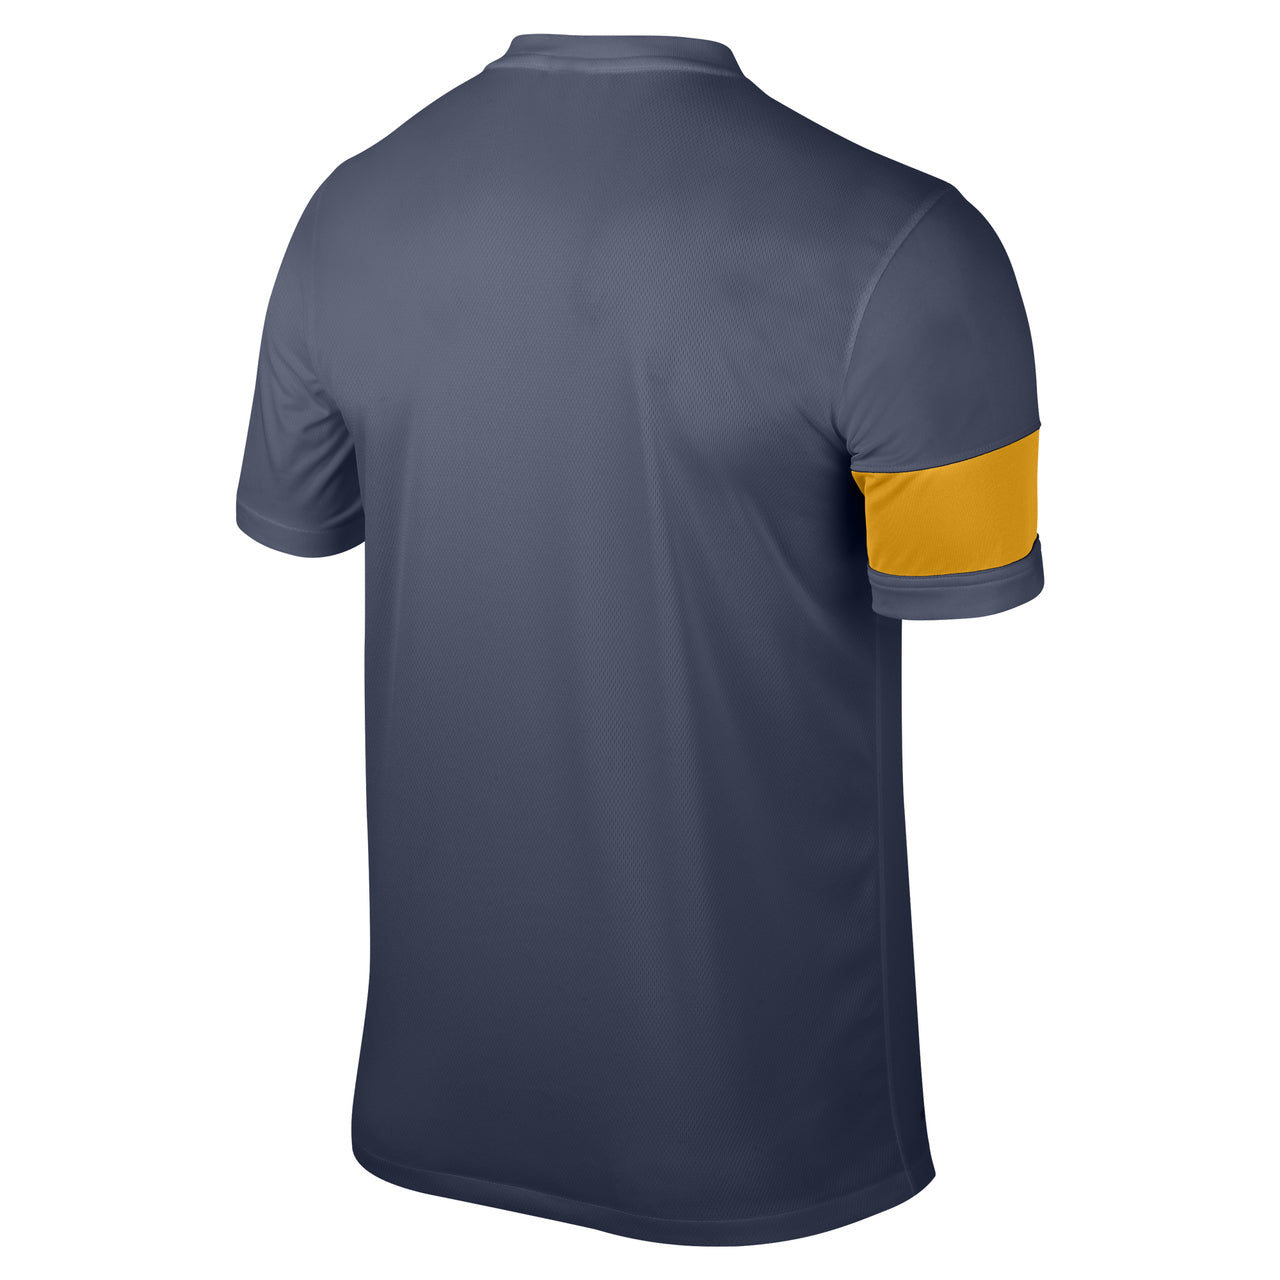 Nike Striker III Game Jersey- Short Sleeve